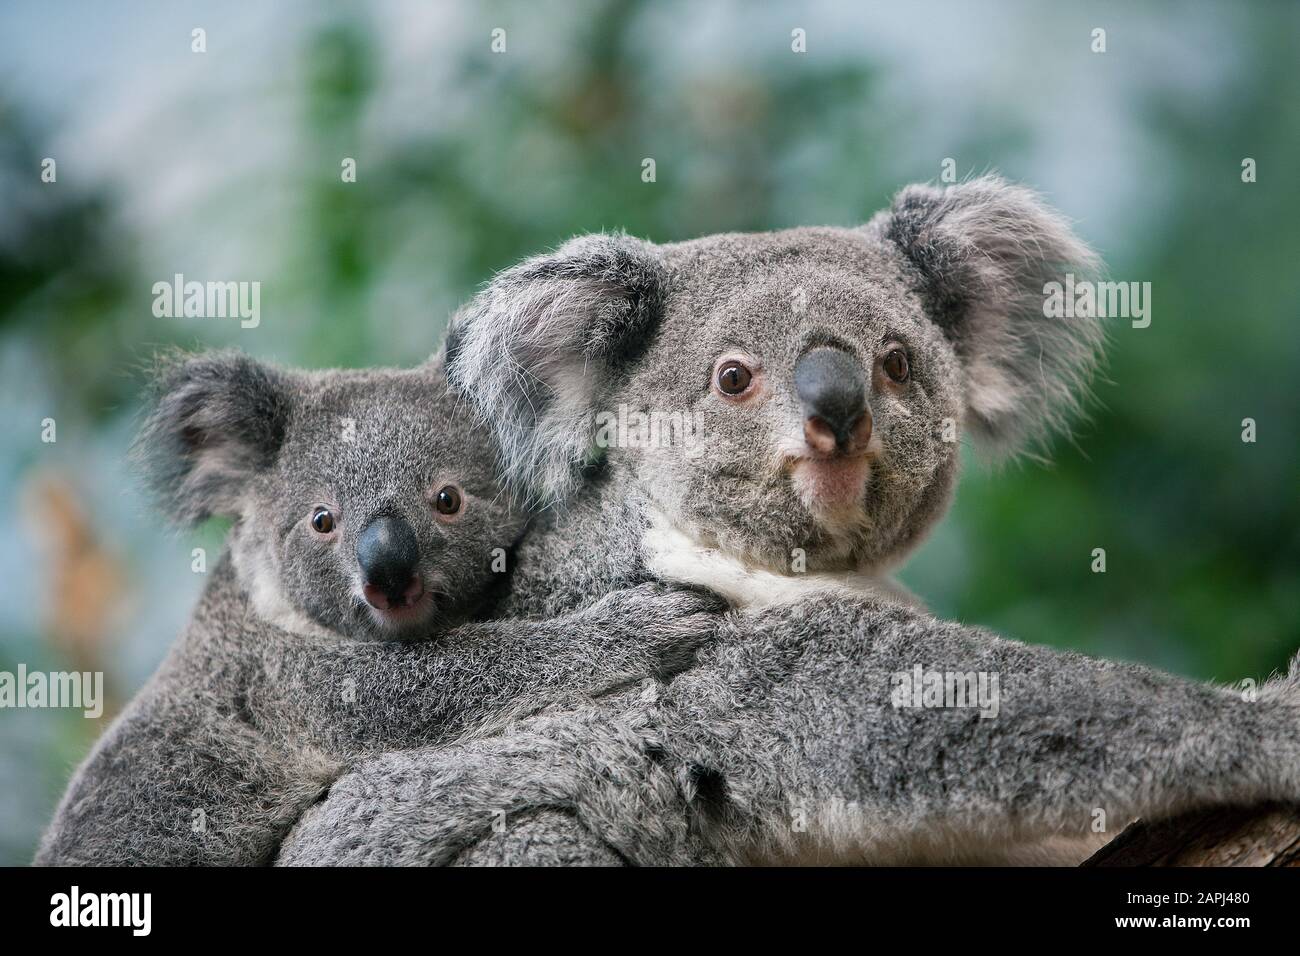 Koala, phascolarctos cinereus, Female carrying Young on its Back Stock Photo